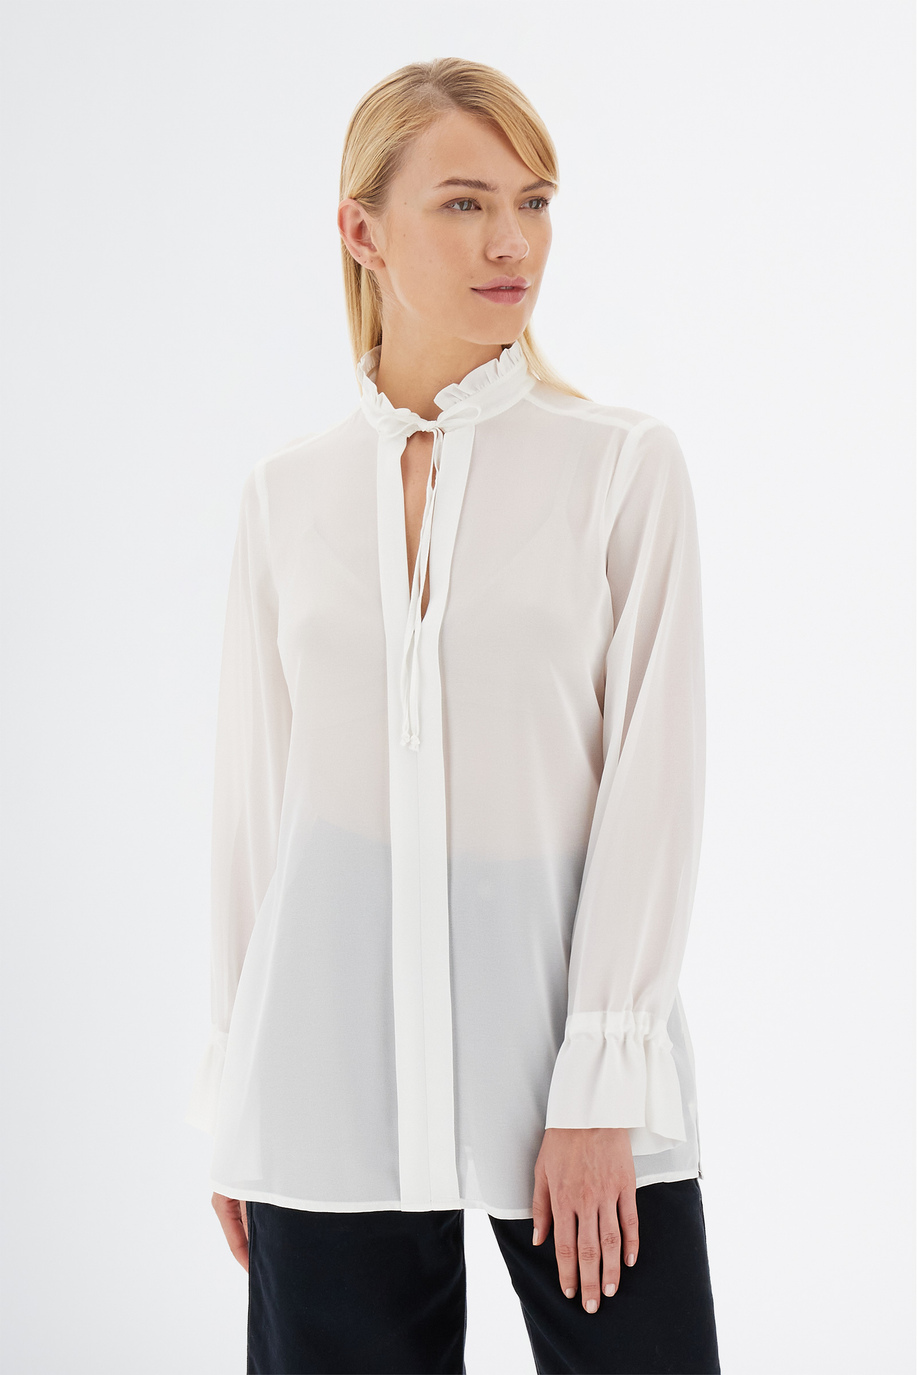 Women’s shirt Argentina fabric georgette regular fit long sleeves - Apparel | La Martina - Official Online Shop